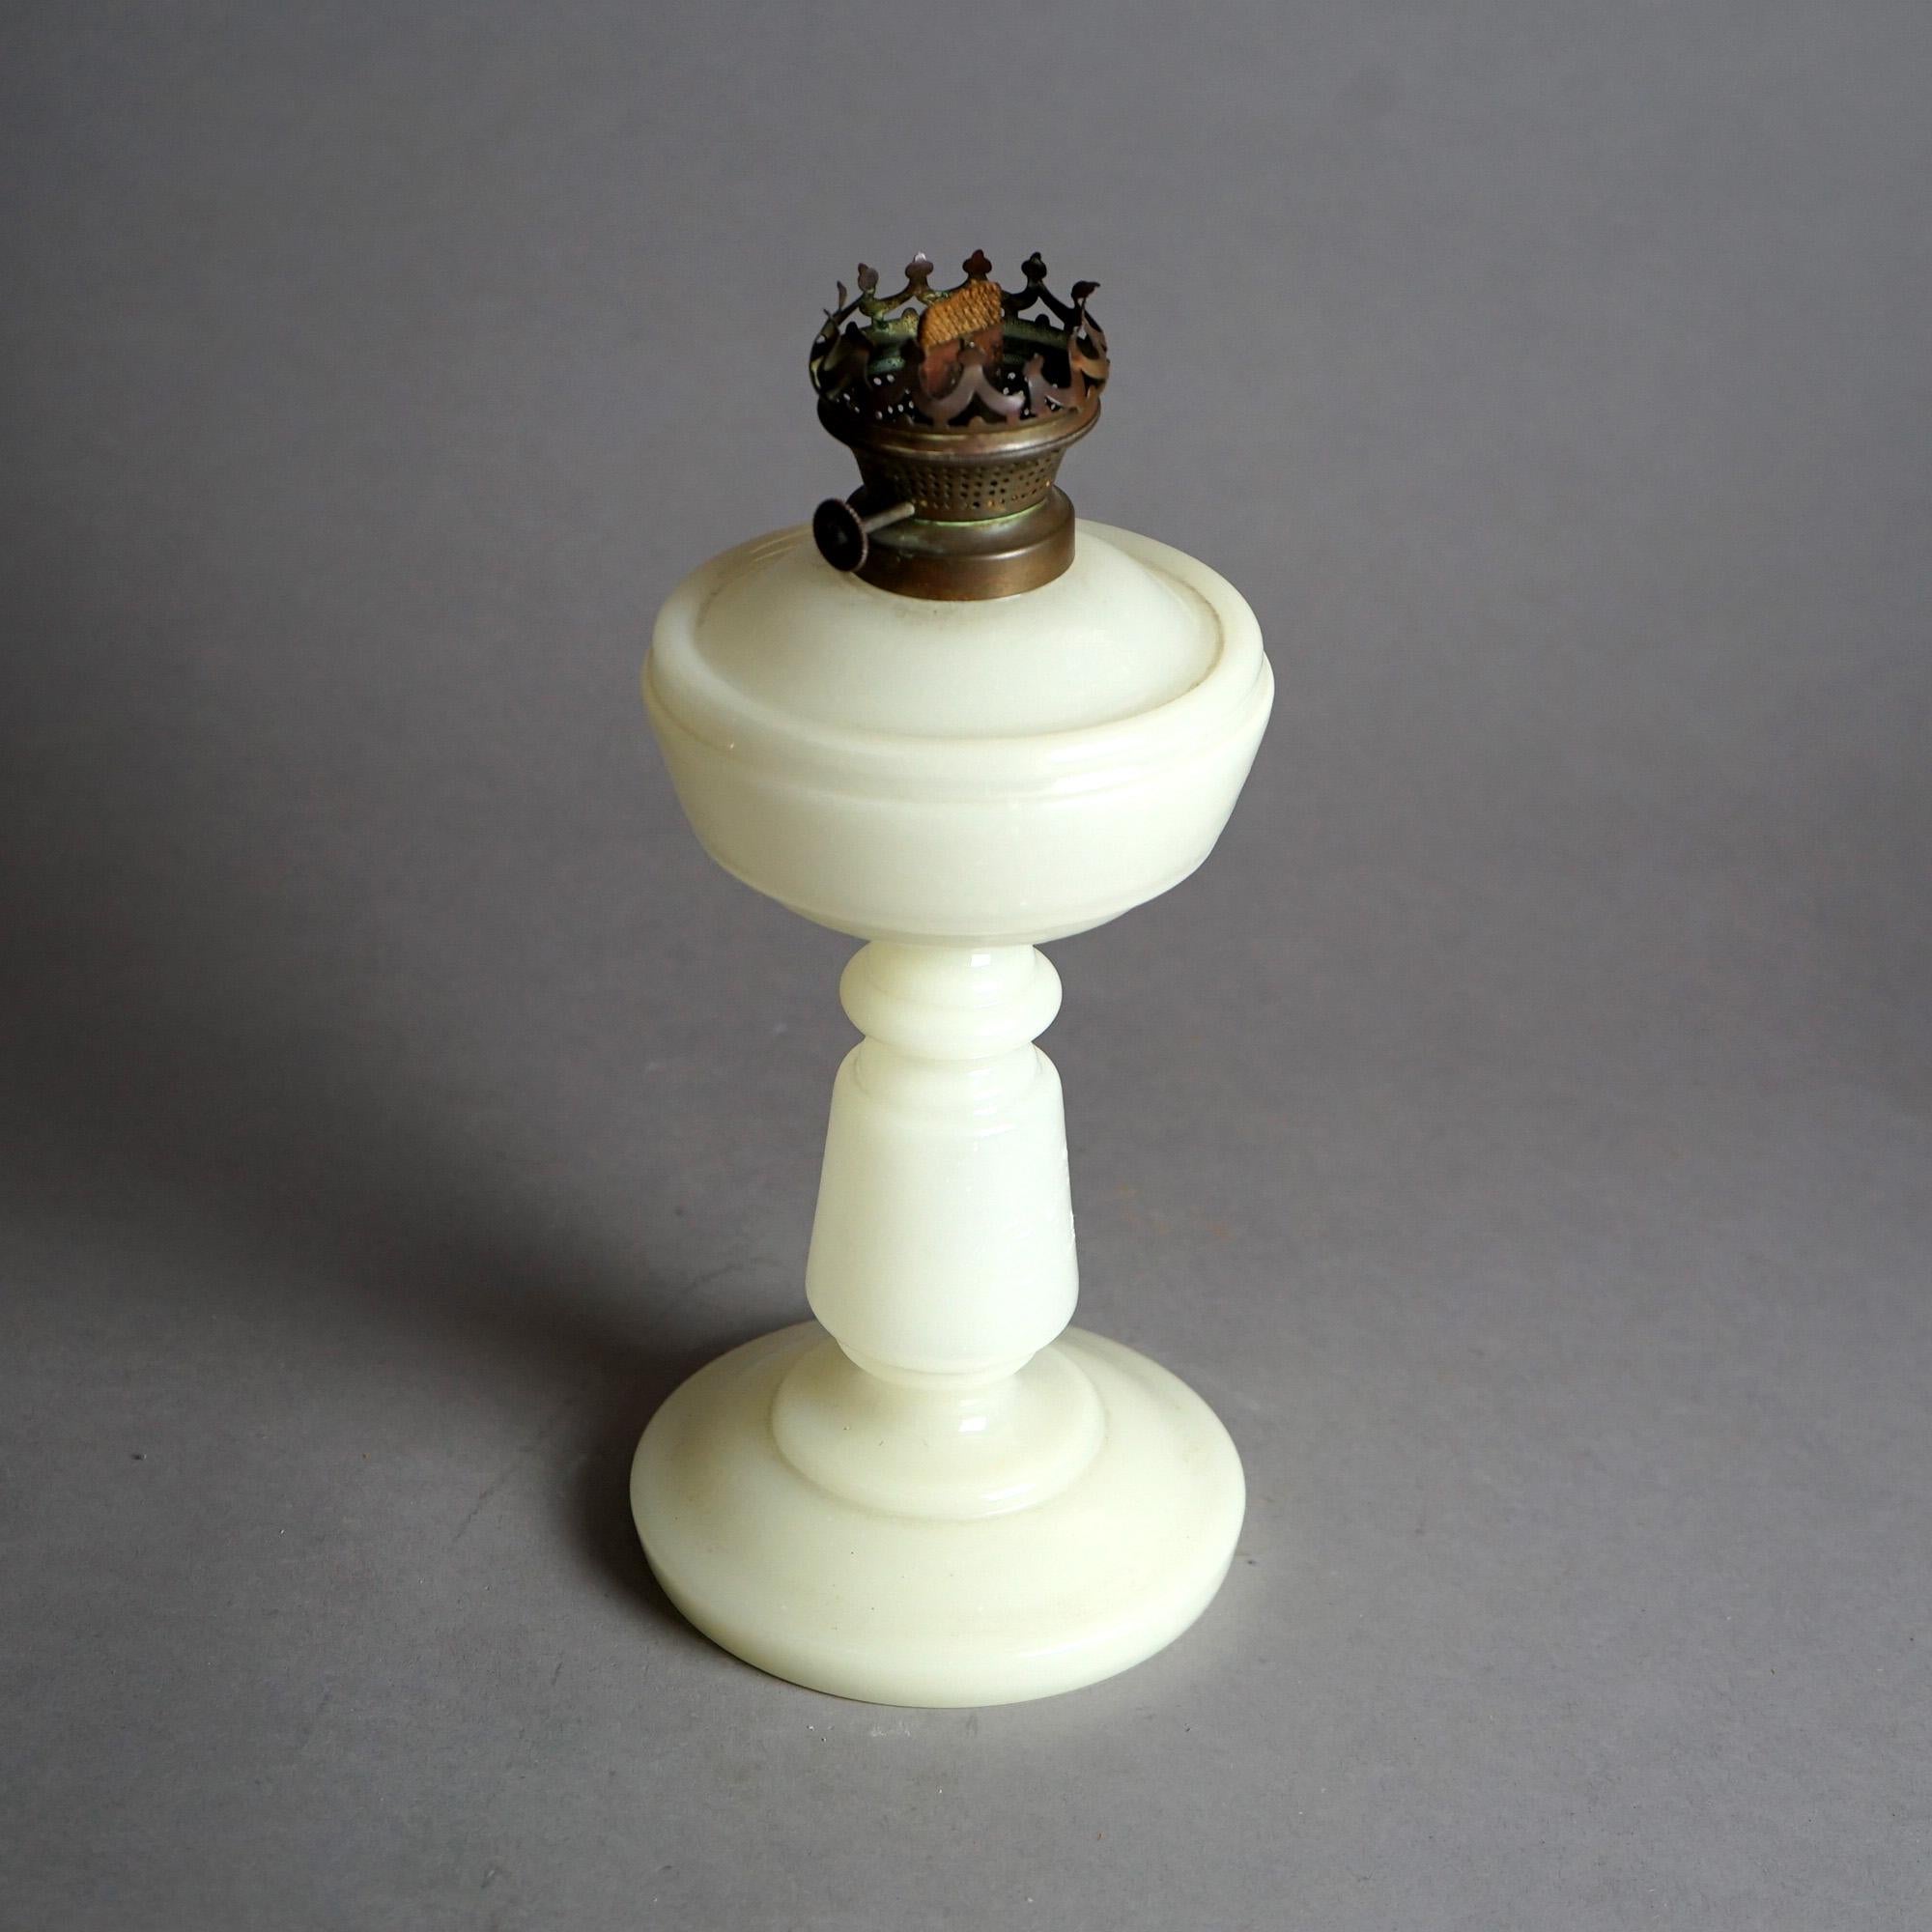 Antique Opaline Clamshell Glass Kerosene Lamp C1870

Measures- 12''H x 5.5''W x 5.5''D